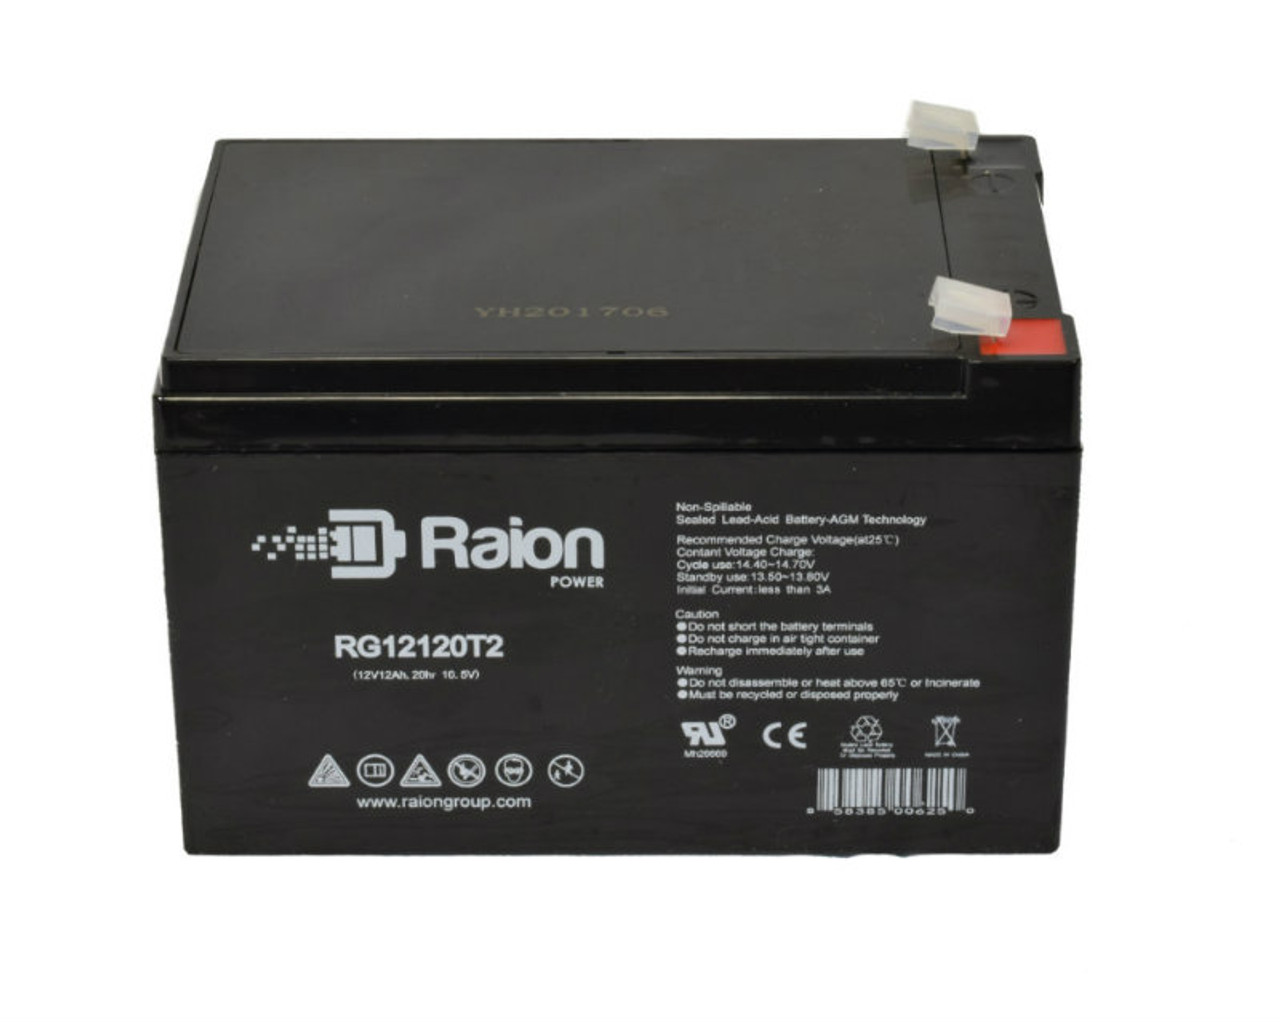 Raion Power RG12120T2 SLA Battery for Chilwee 6-FM-10